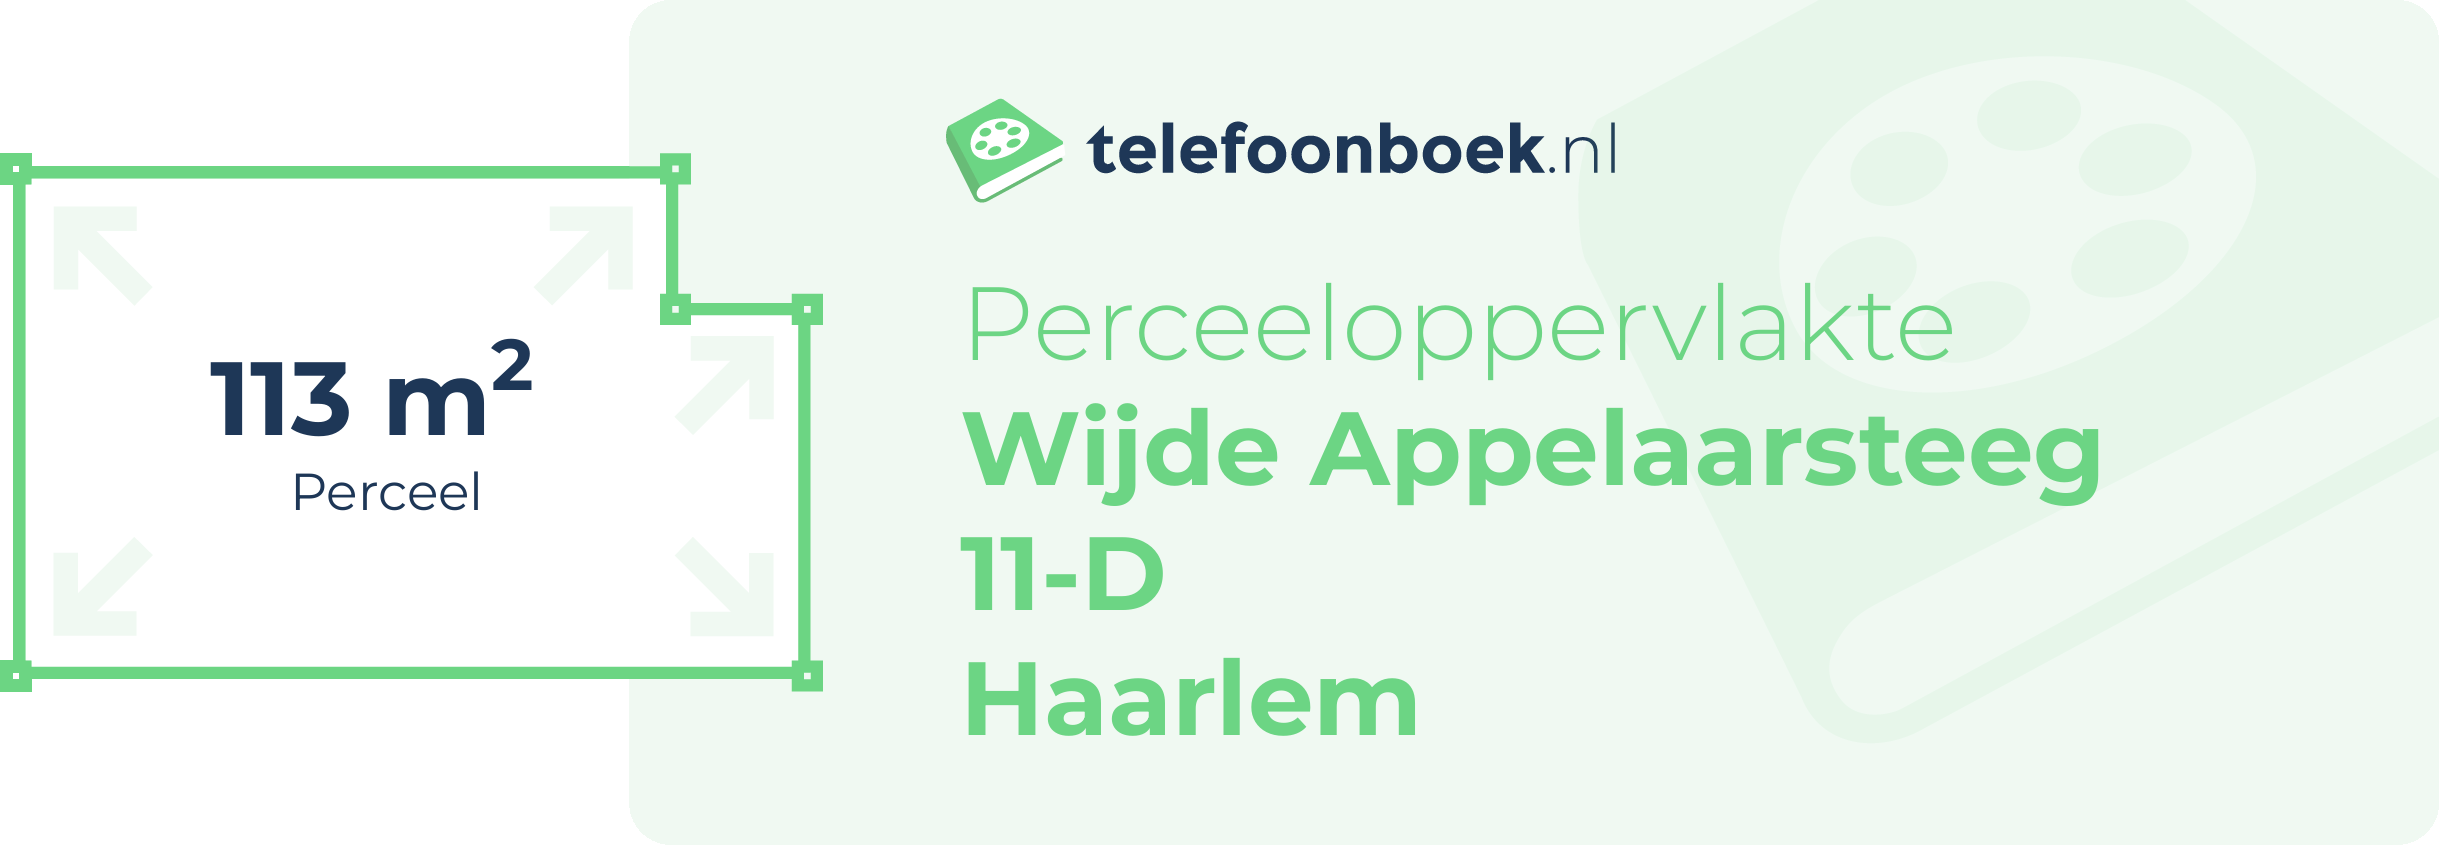 Perceeloppervlakte Wijde Appelaarsteeg 11-D Haarlem